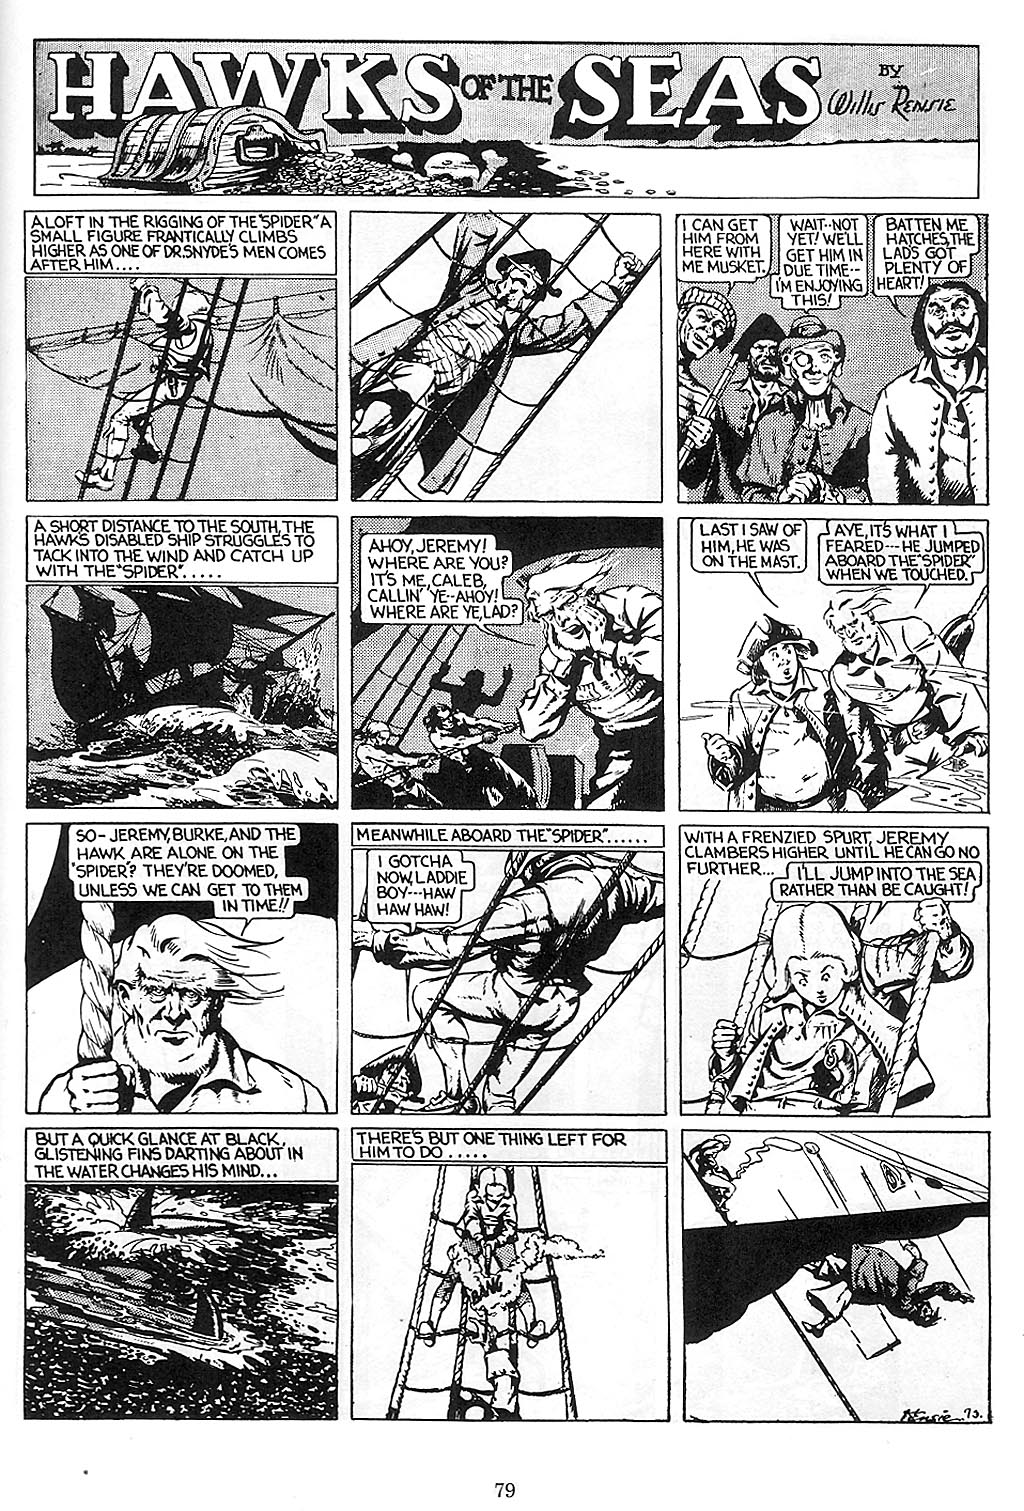 Read online Will Eisner's Hawks of the Seas comic -  Issue # TPB - 80